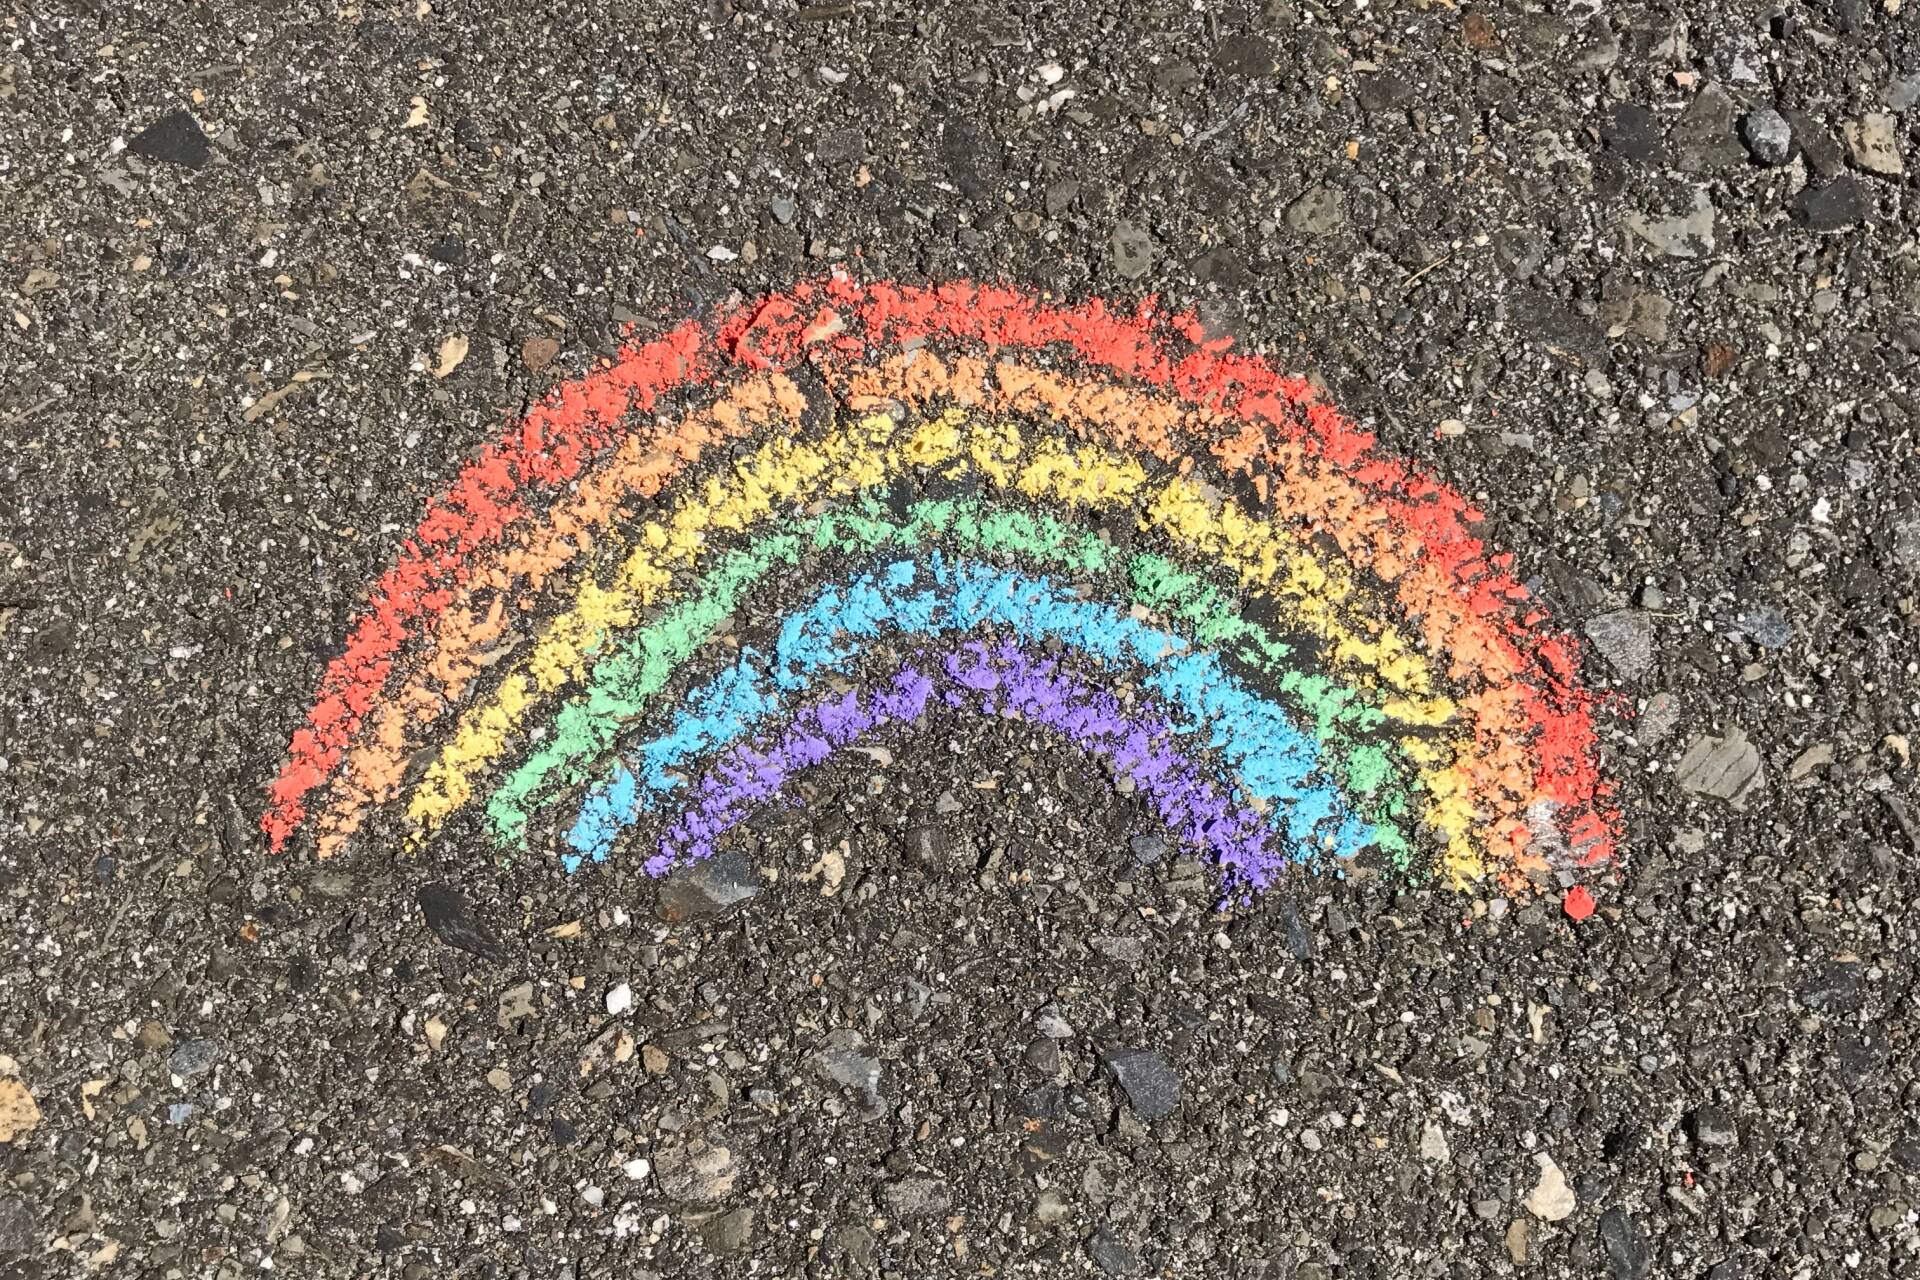 Chalk painted rainbow on the ground